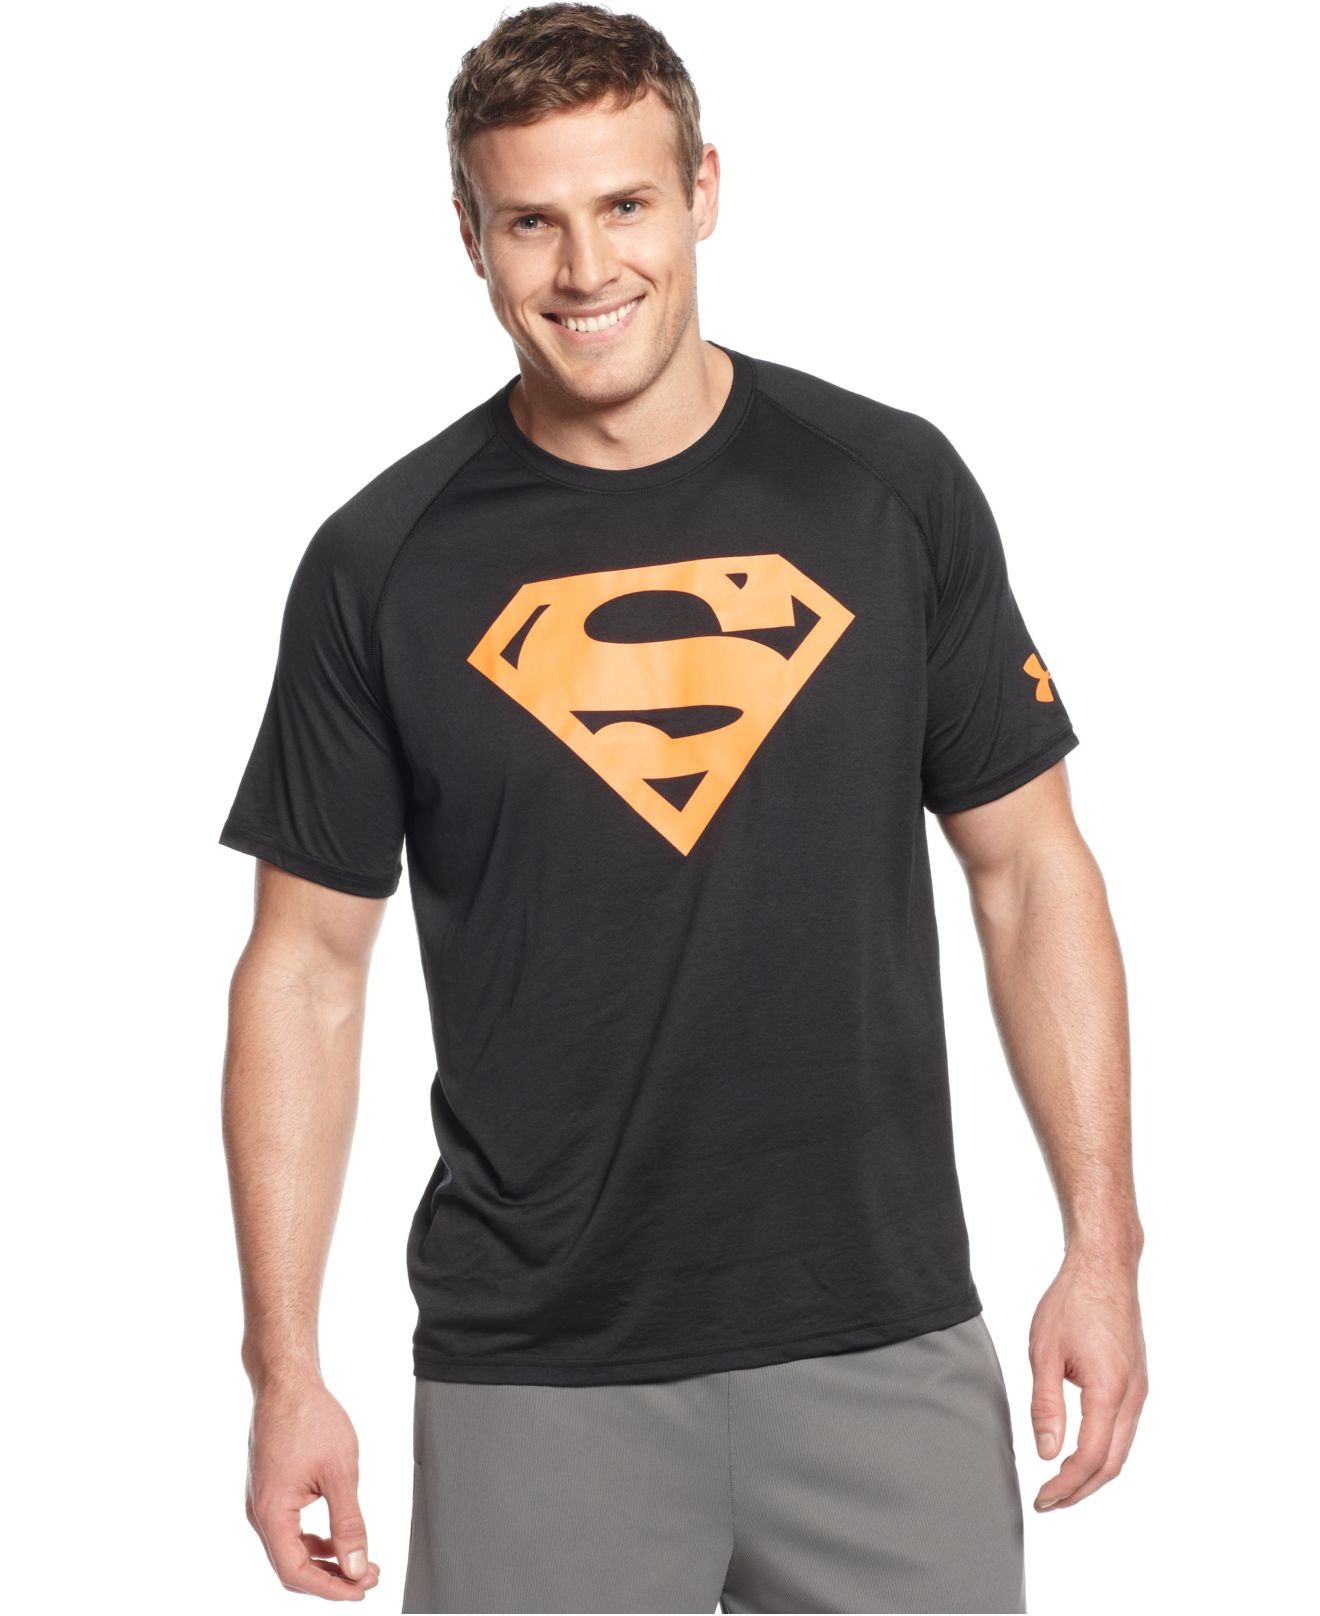 Under Armour Ae Neon Superman Graphic T-Shirt in Orange for Men - Lyst